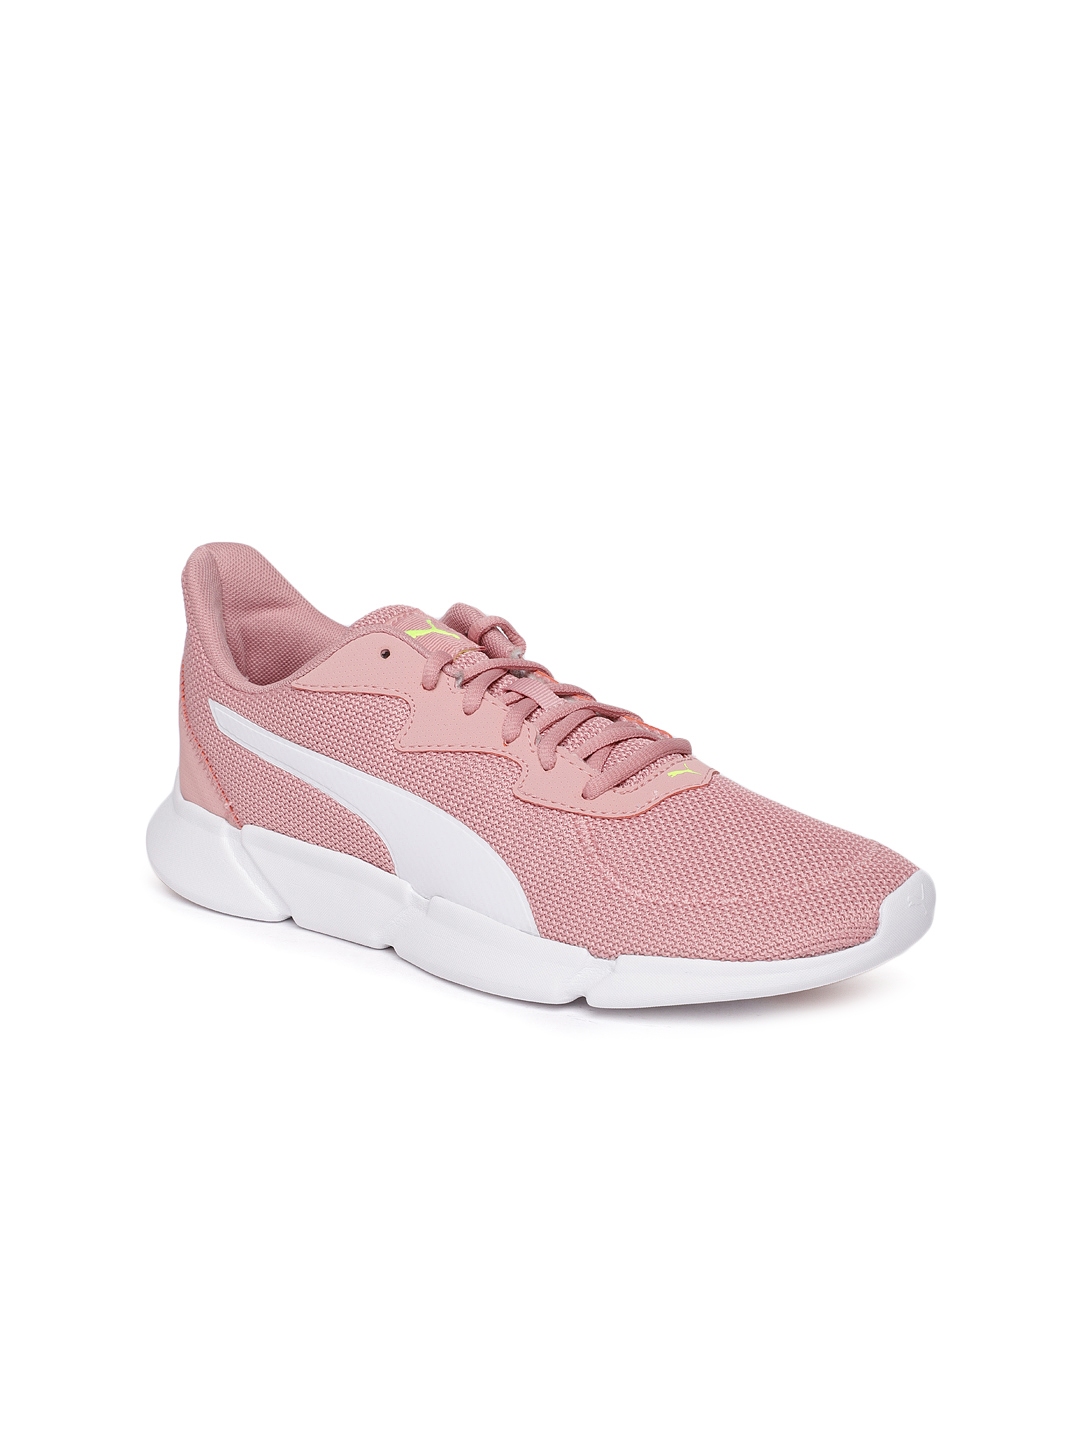 pink puma tennis shoes